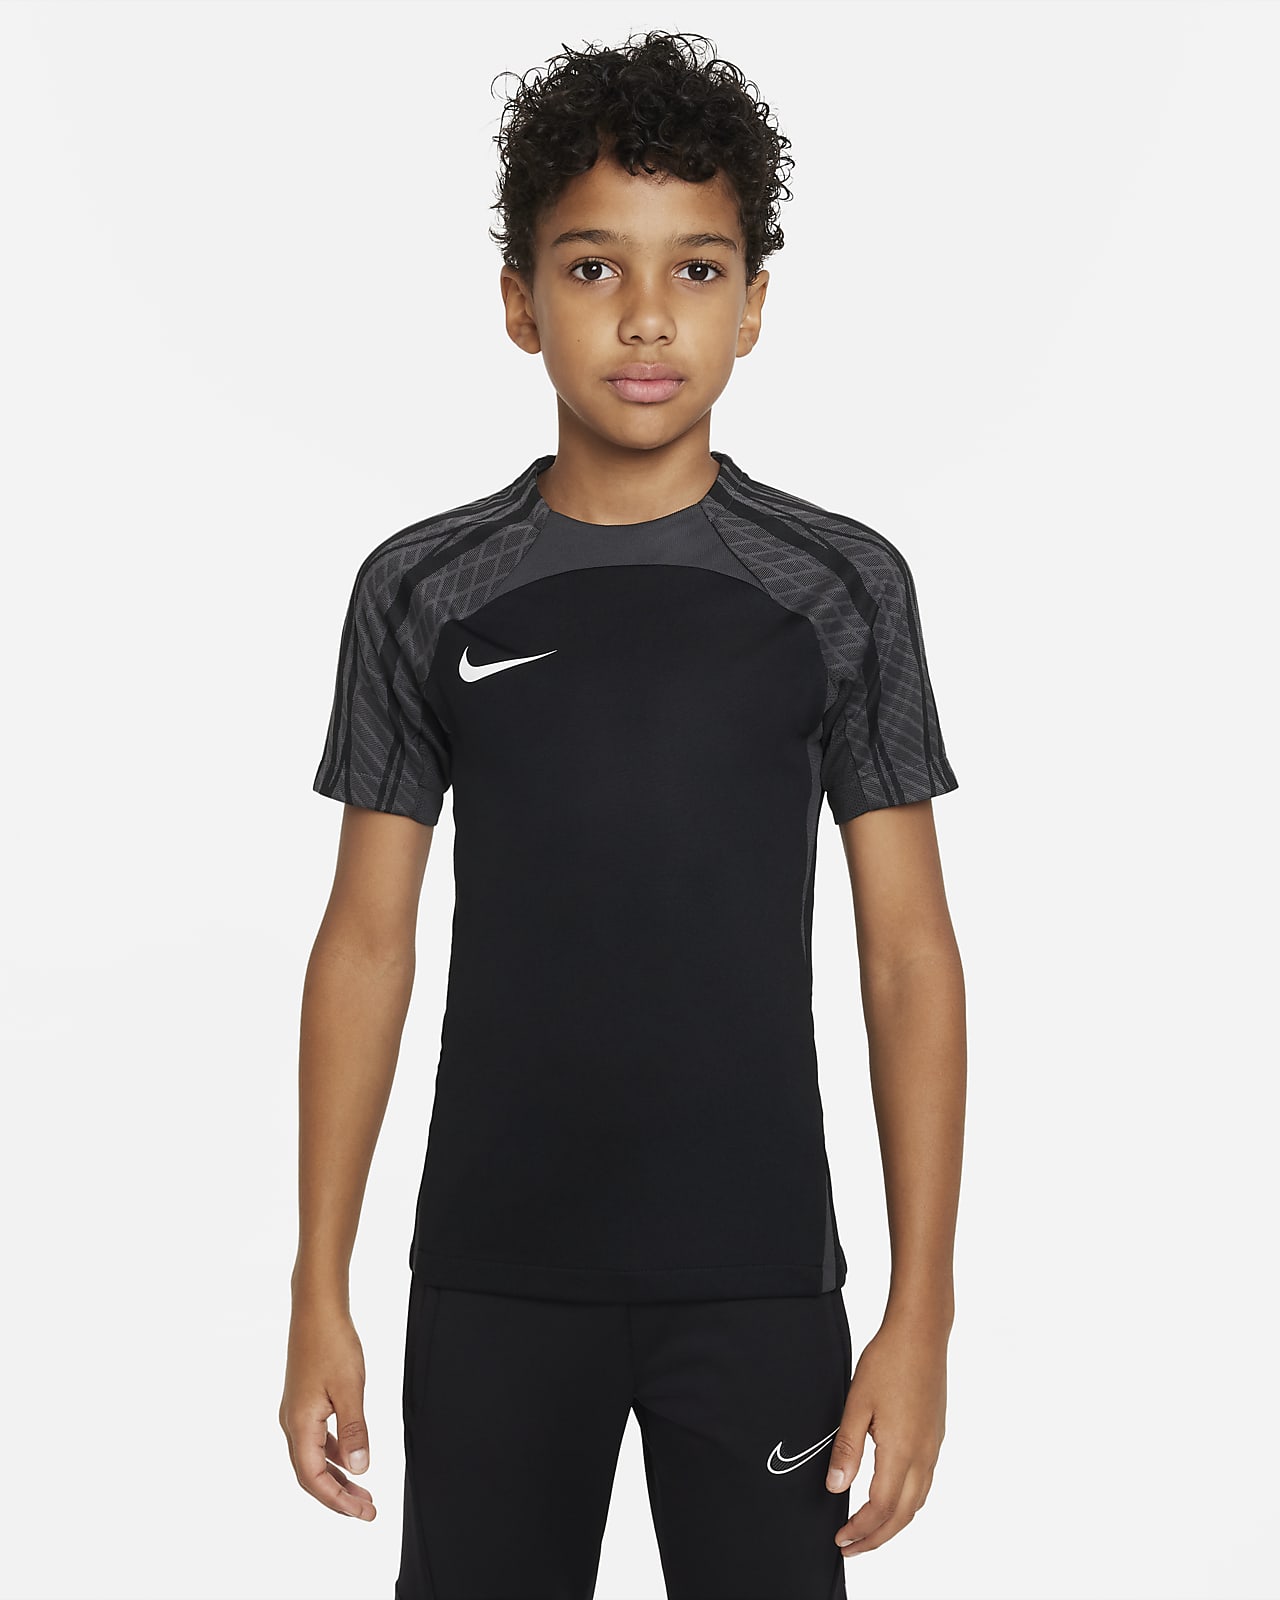 asustado Reparación posible Embajador Nike Dri-FIT Strike Older Kids' Short-Sleeve Football Top. Nike NO